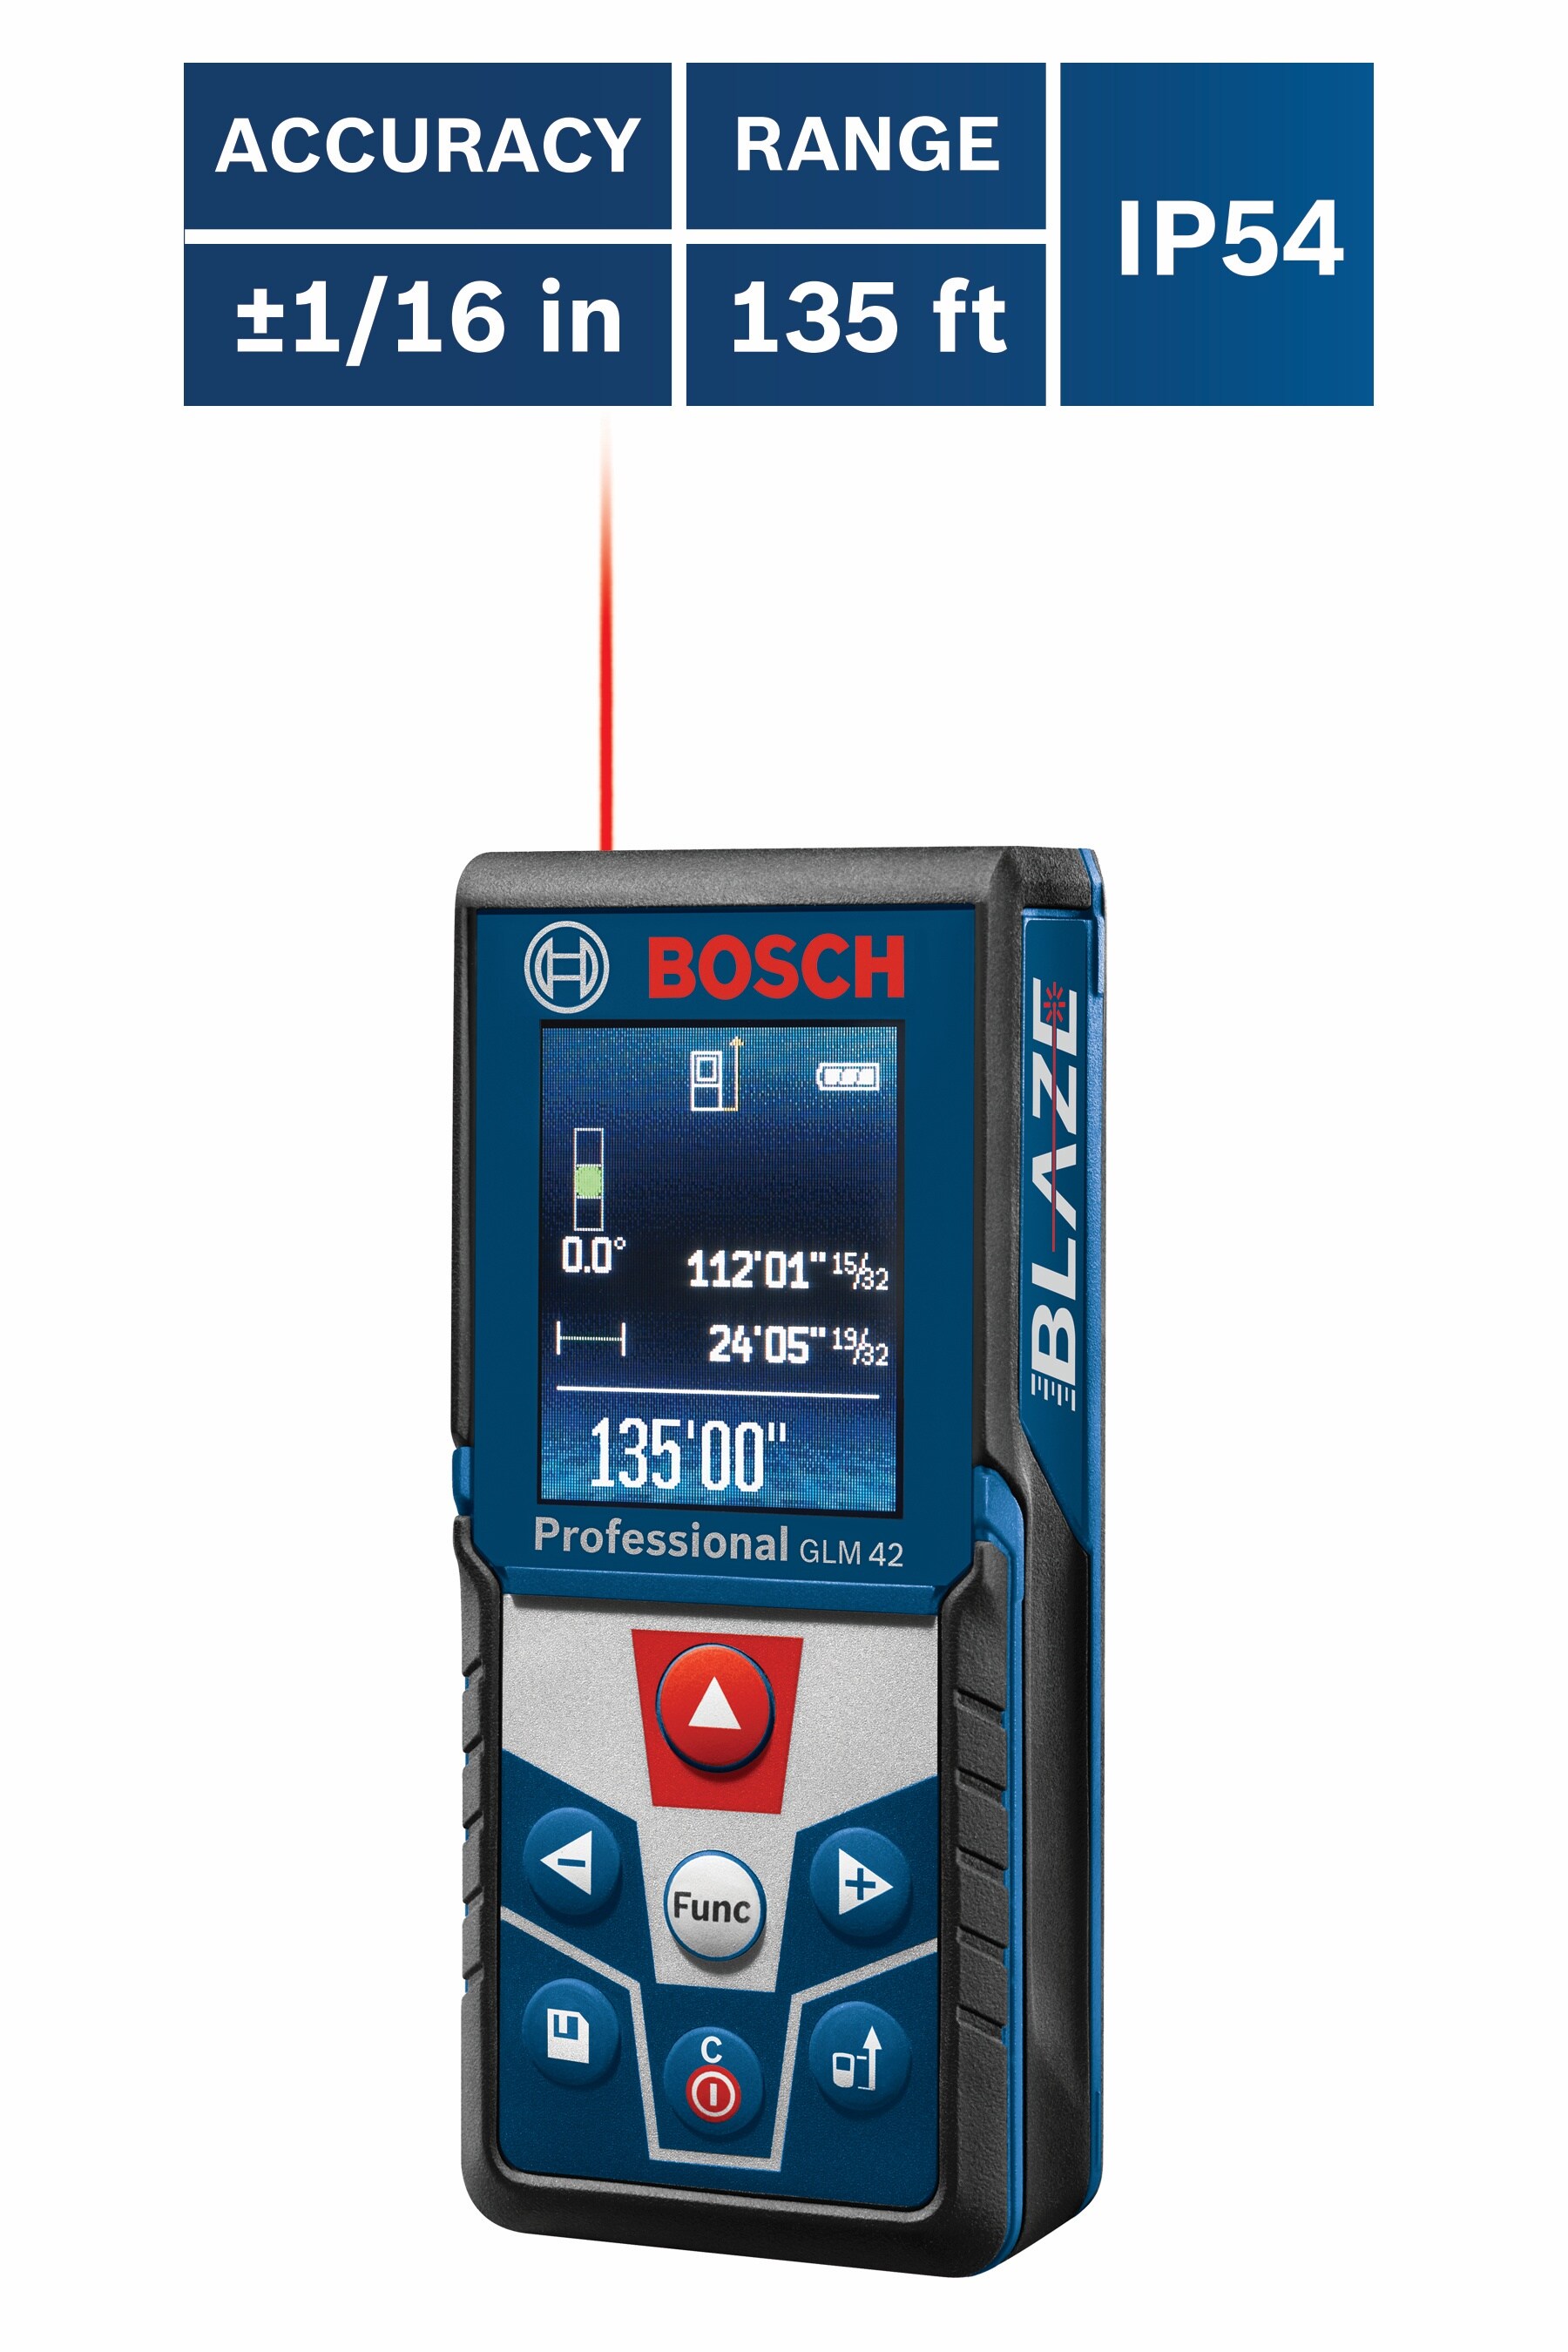 Télémètre laser Bosch Professional GLM 20